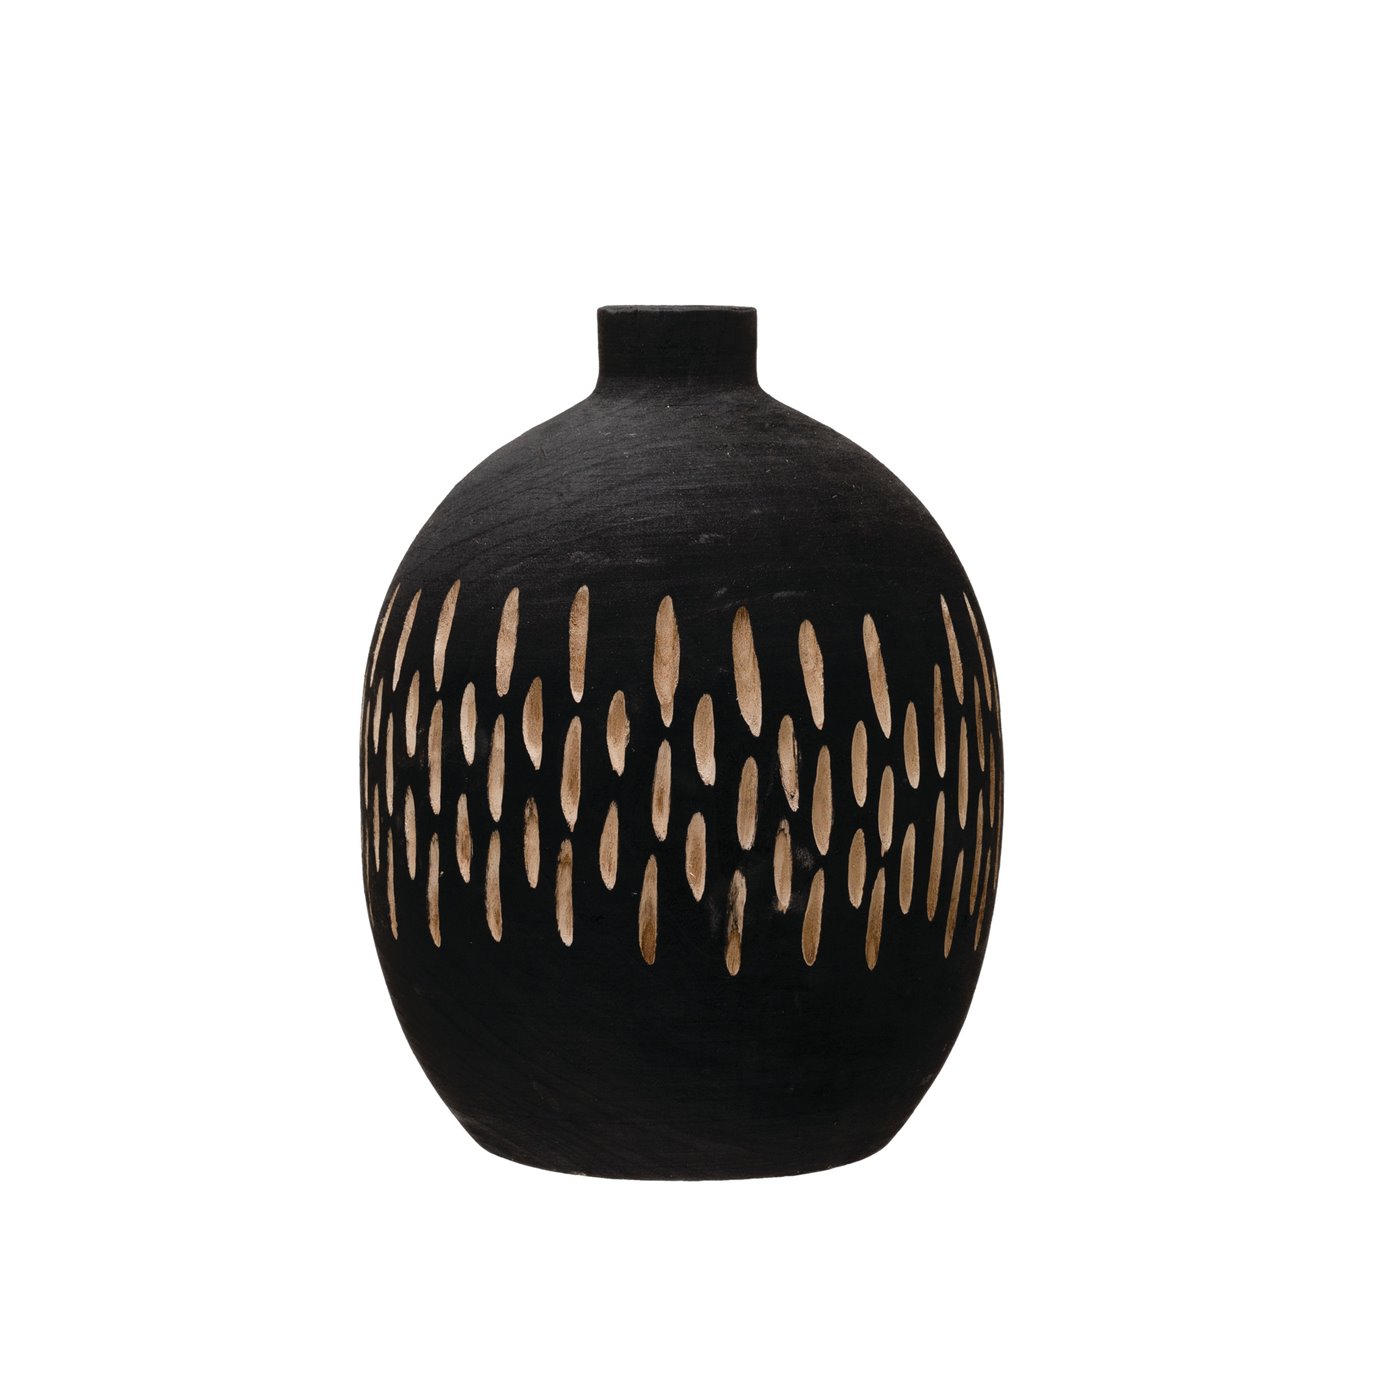 Paulownia Wood Charred Black Carved Design Vase